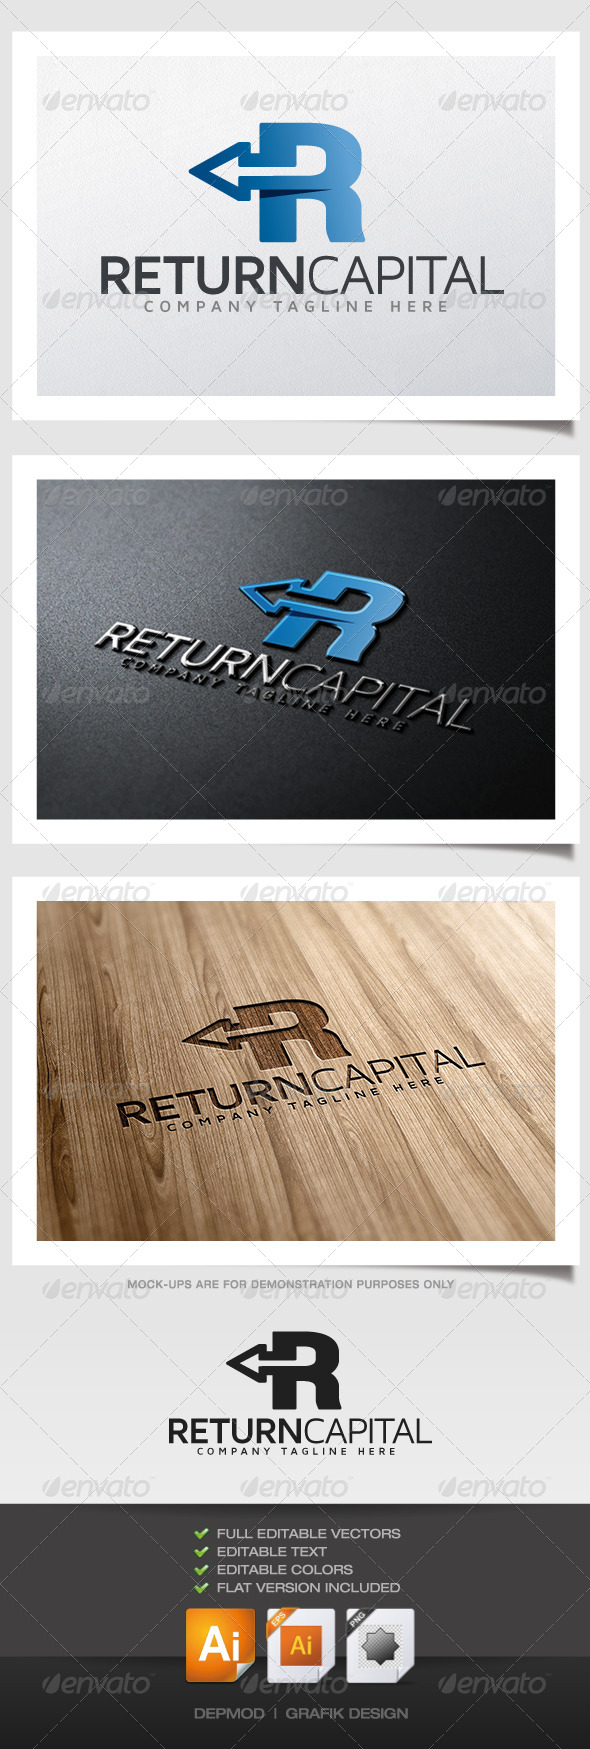 Return Capital Logo